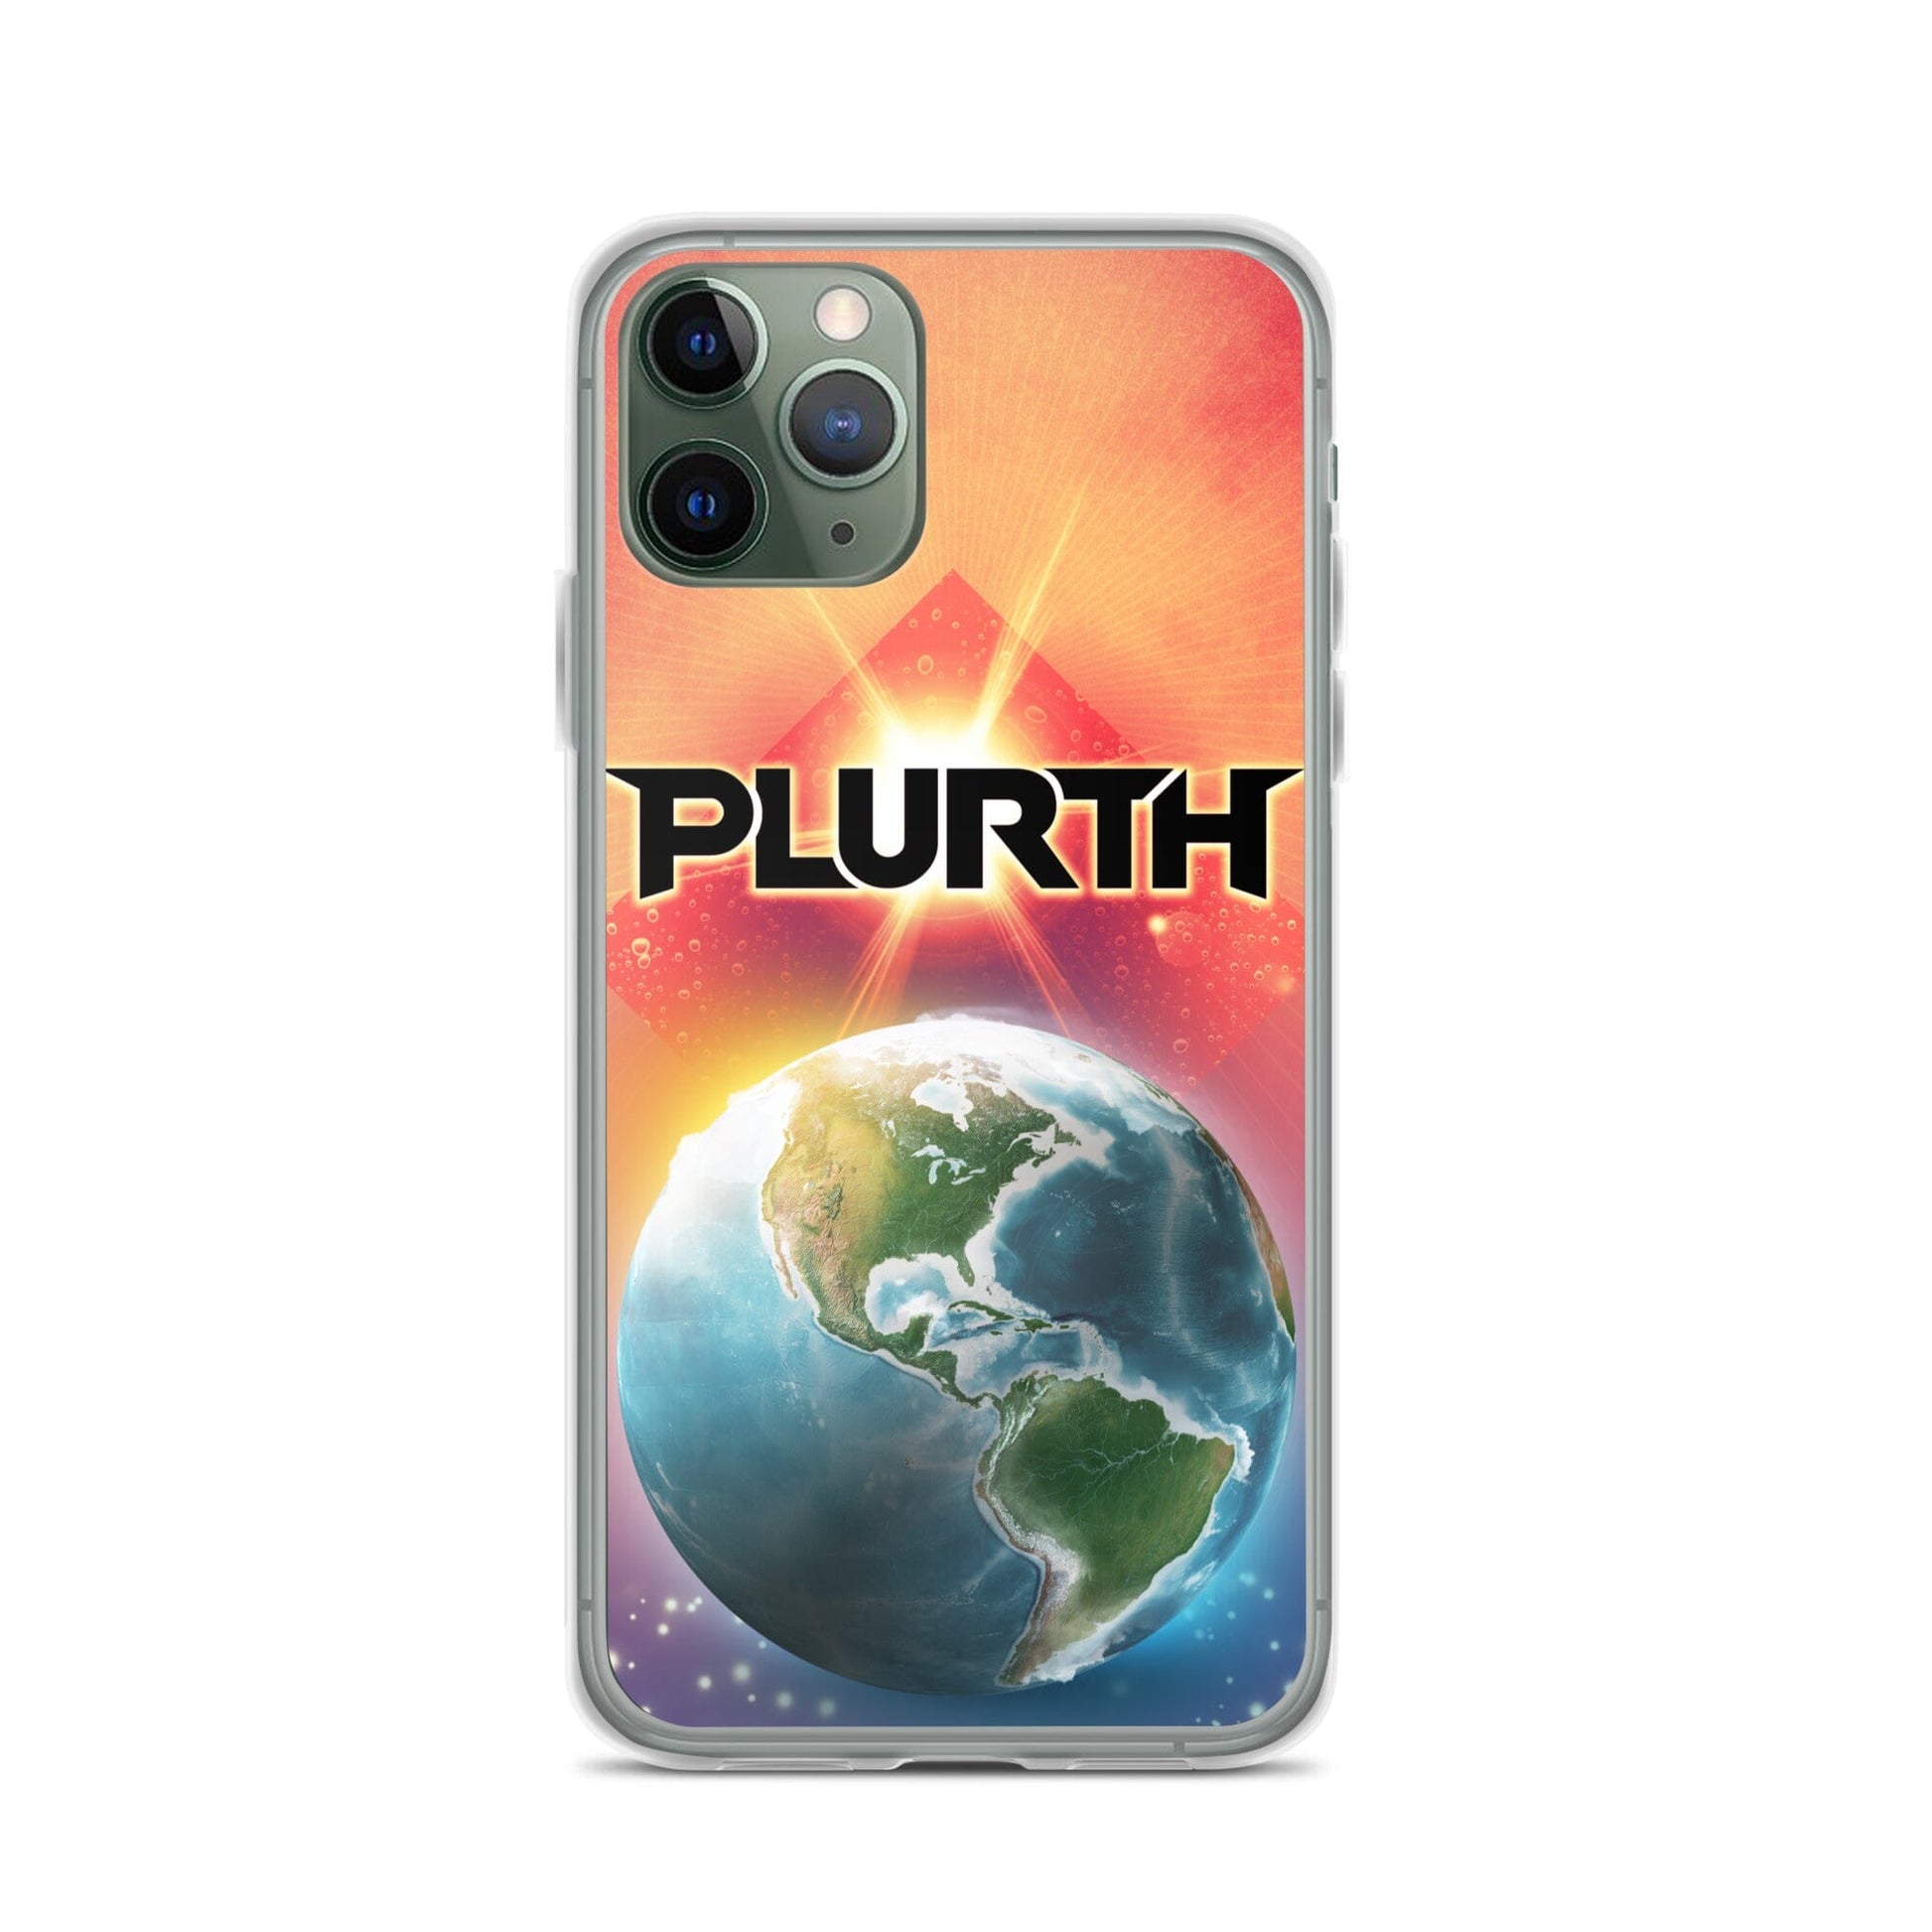 PLURTH iPhone Case PLURTHLINGS iPhone 11 Pro 